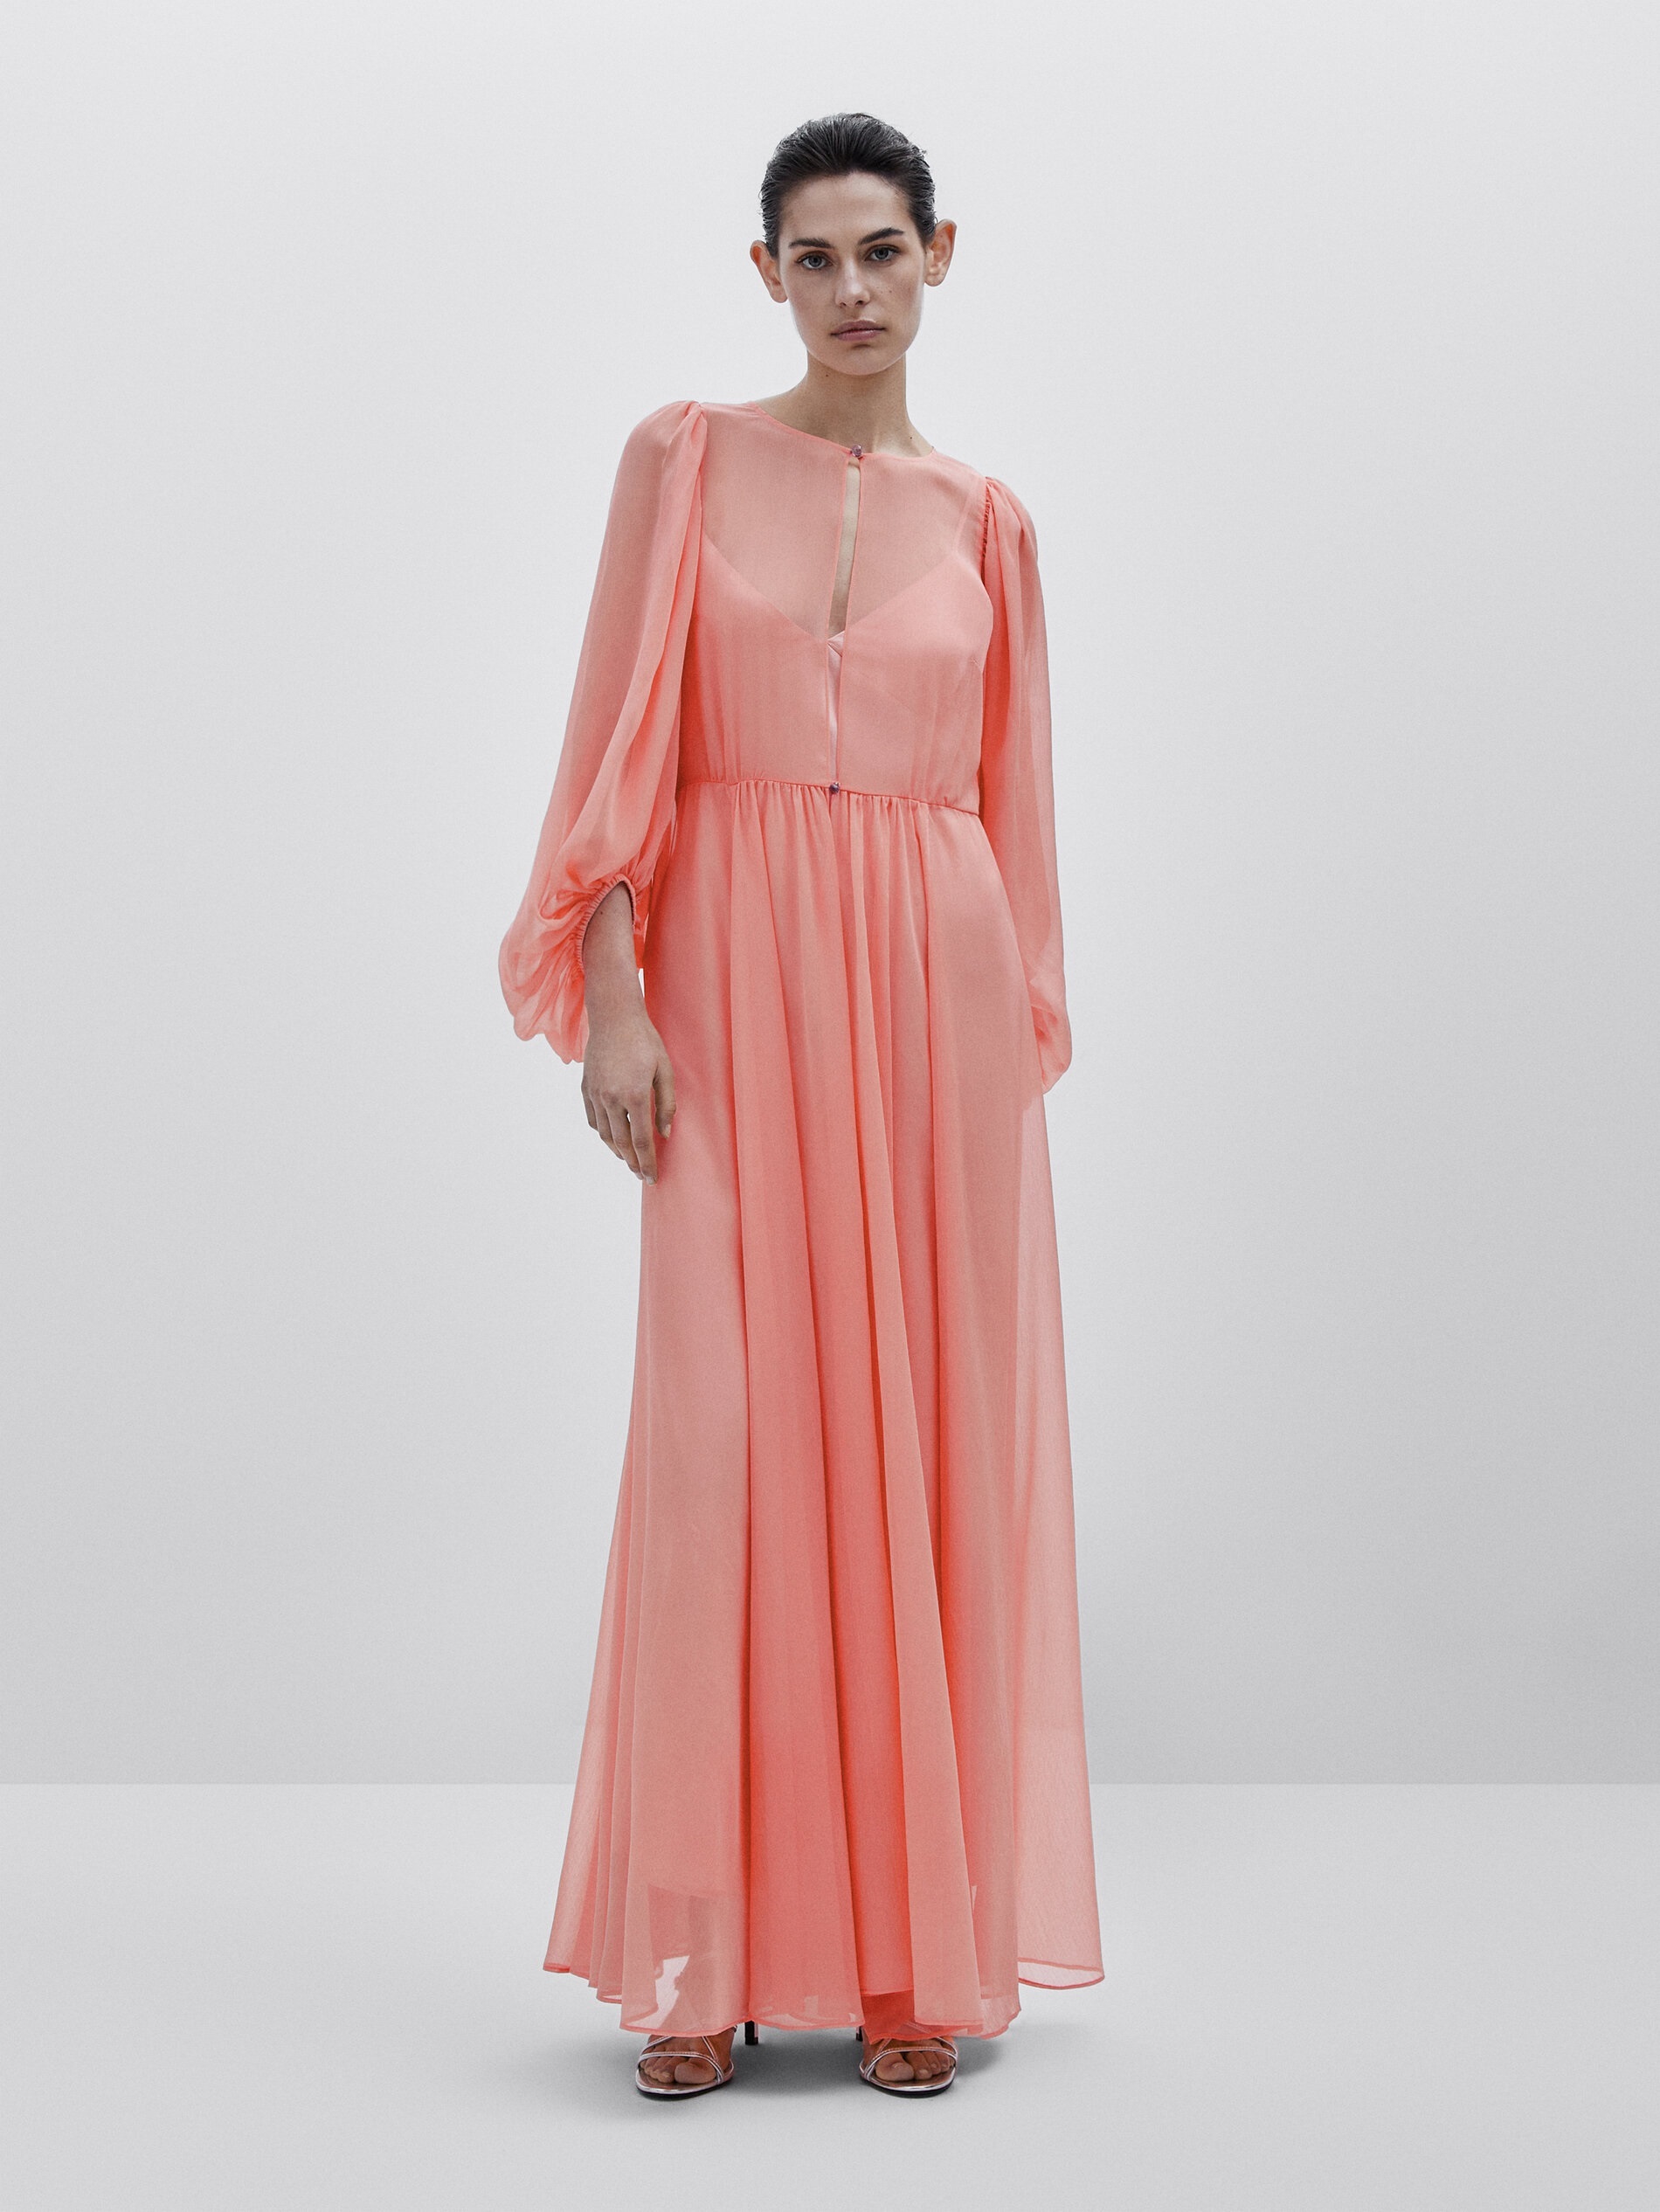 ALT: 10 vestidos de manga abullonada para ir ideal a una boda, de Massimo Dutti a Mango